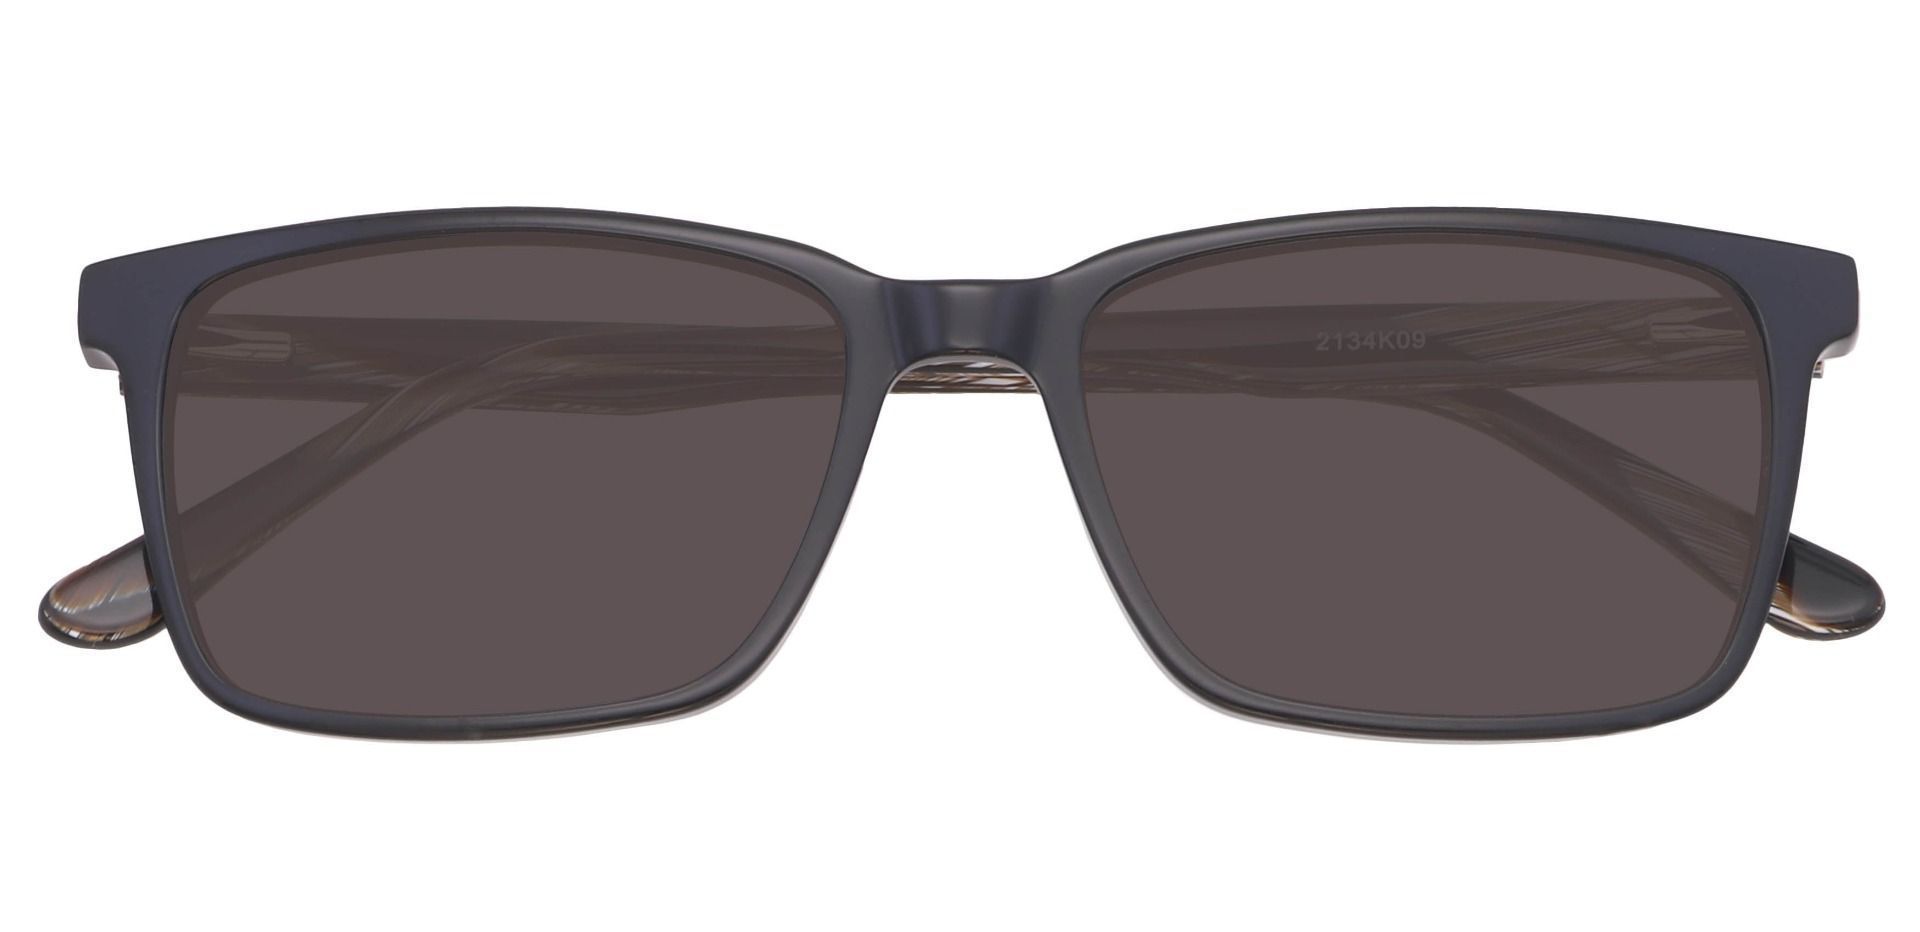 Venice Rectangle Prescription Sunglasses - Black Frame With Gray Lenses